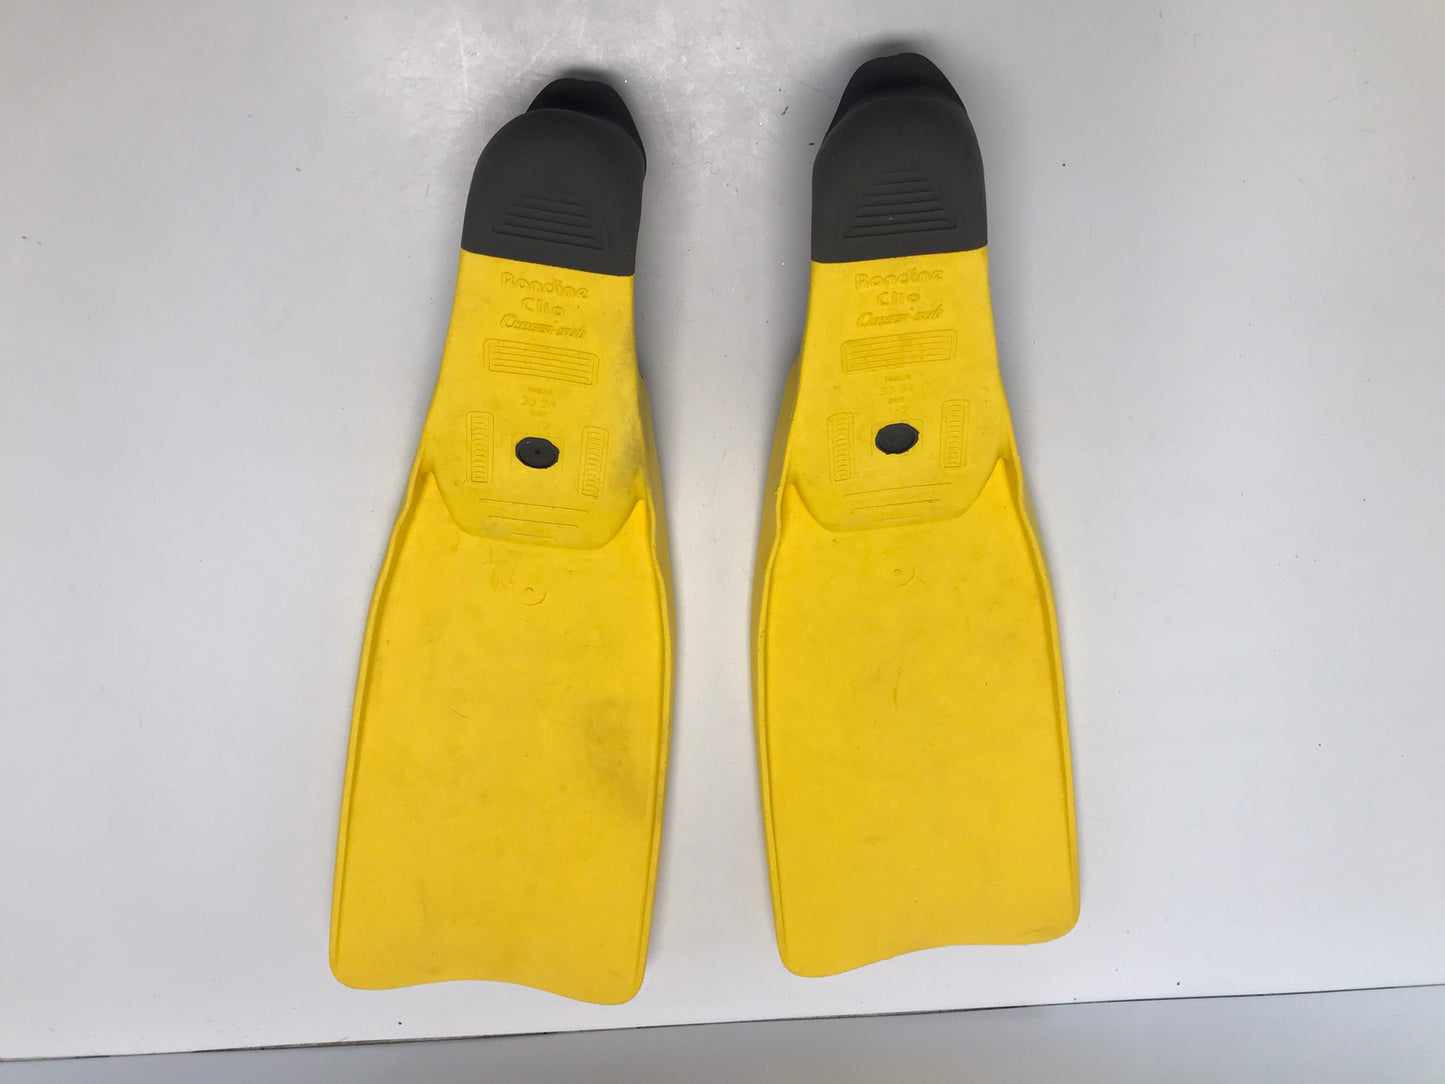 Snorkel Dive Fins Child Size 1-2 Cressi-Sub Scuba Swim Surf Yellow